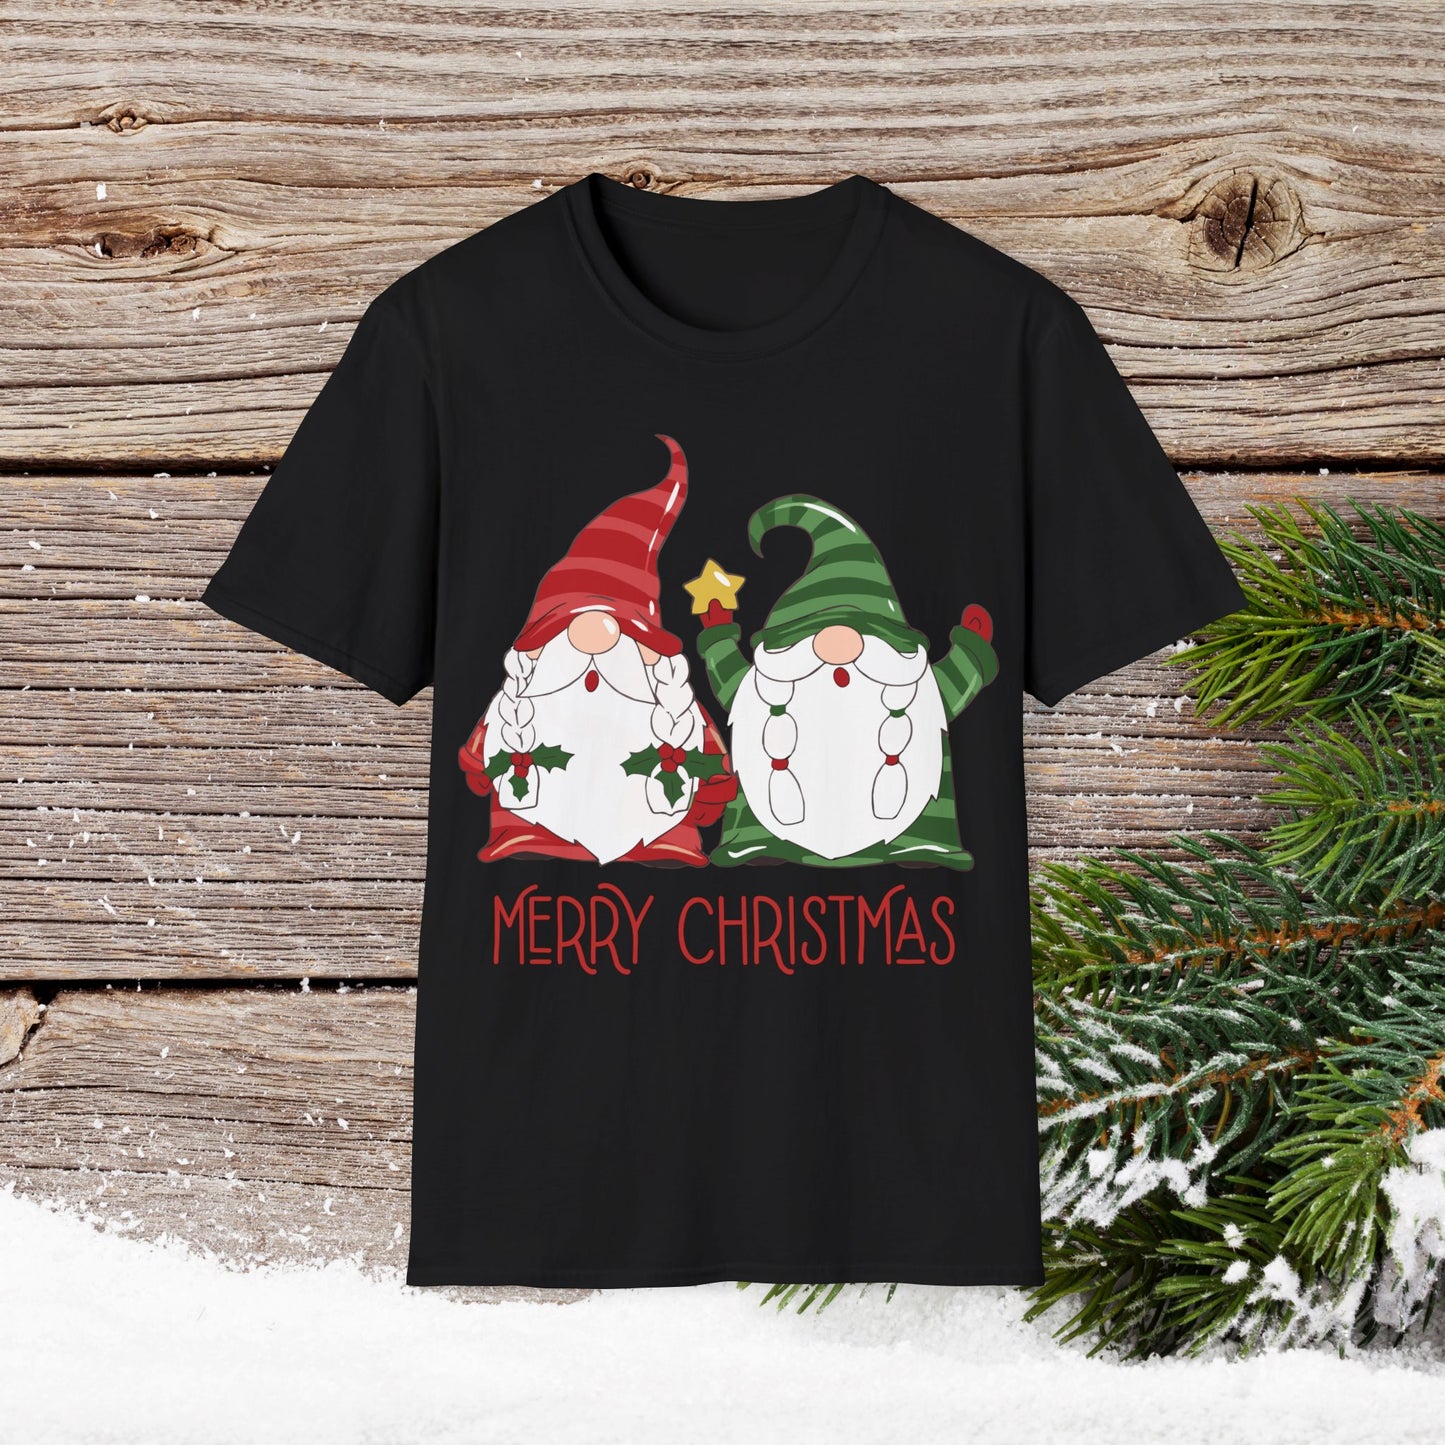 Christmas T-Shirt - Gnome Merry Christmas - Cute Christmas Shirts - Youth and Adult Christmas TShirts T-Shirts Graphic Avenue Black Adult Small 